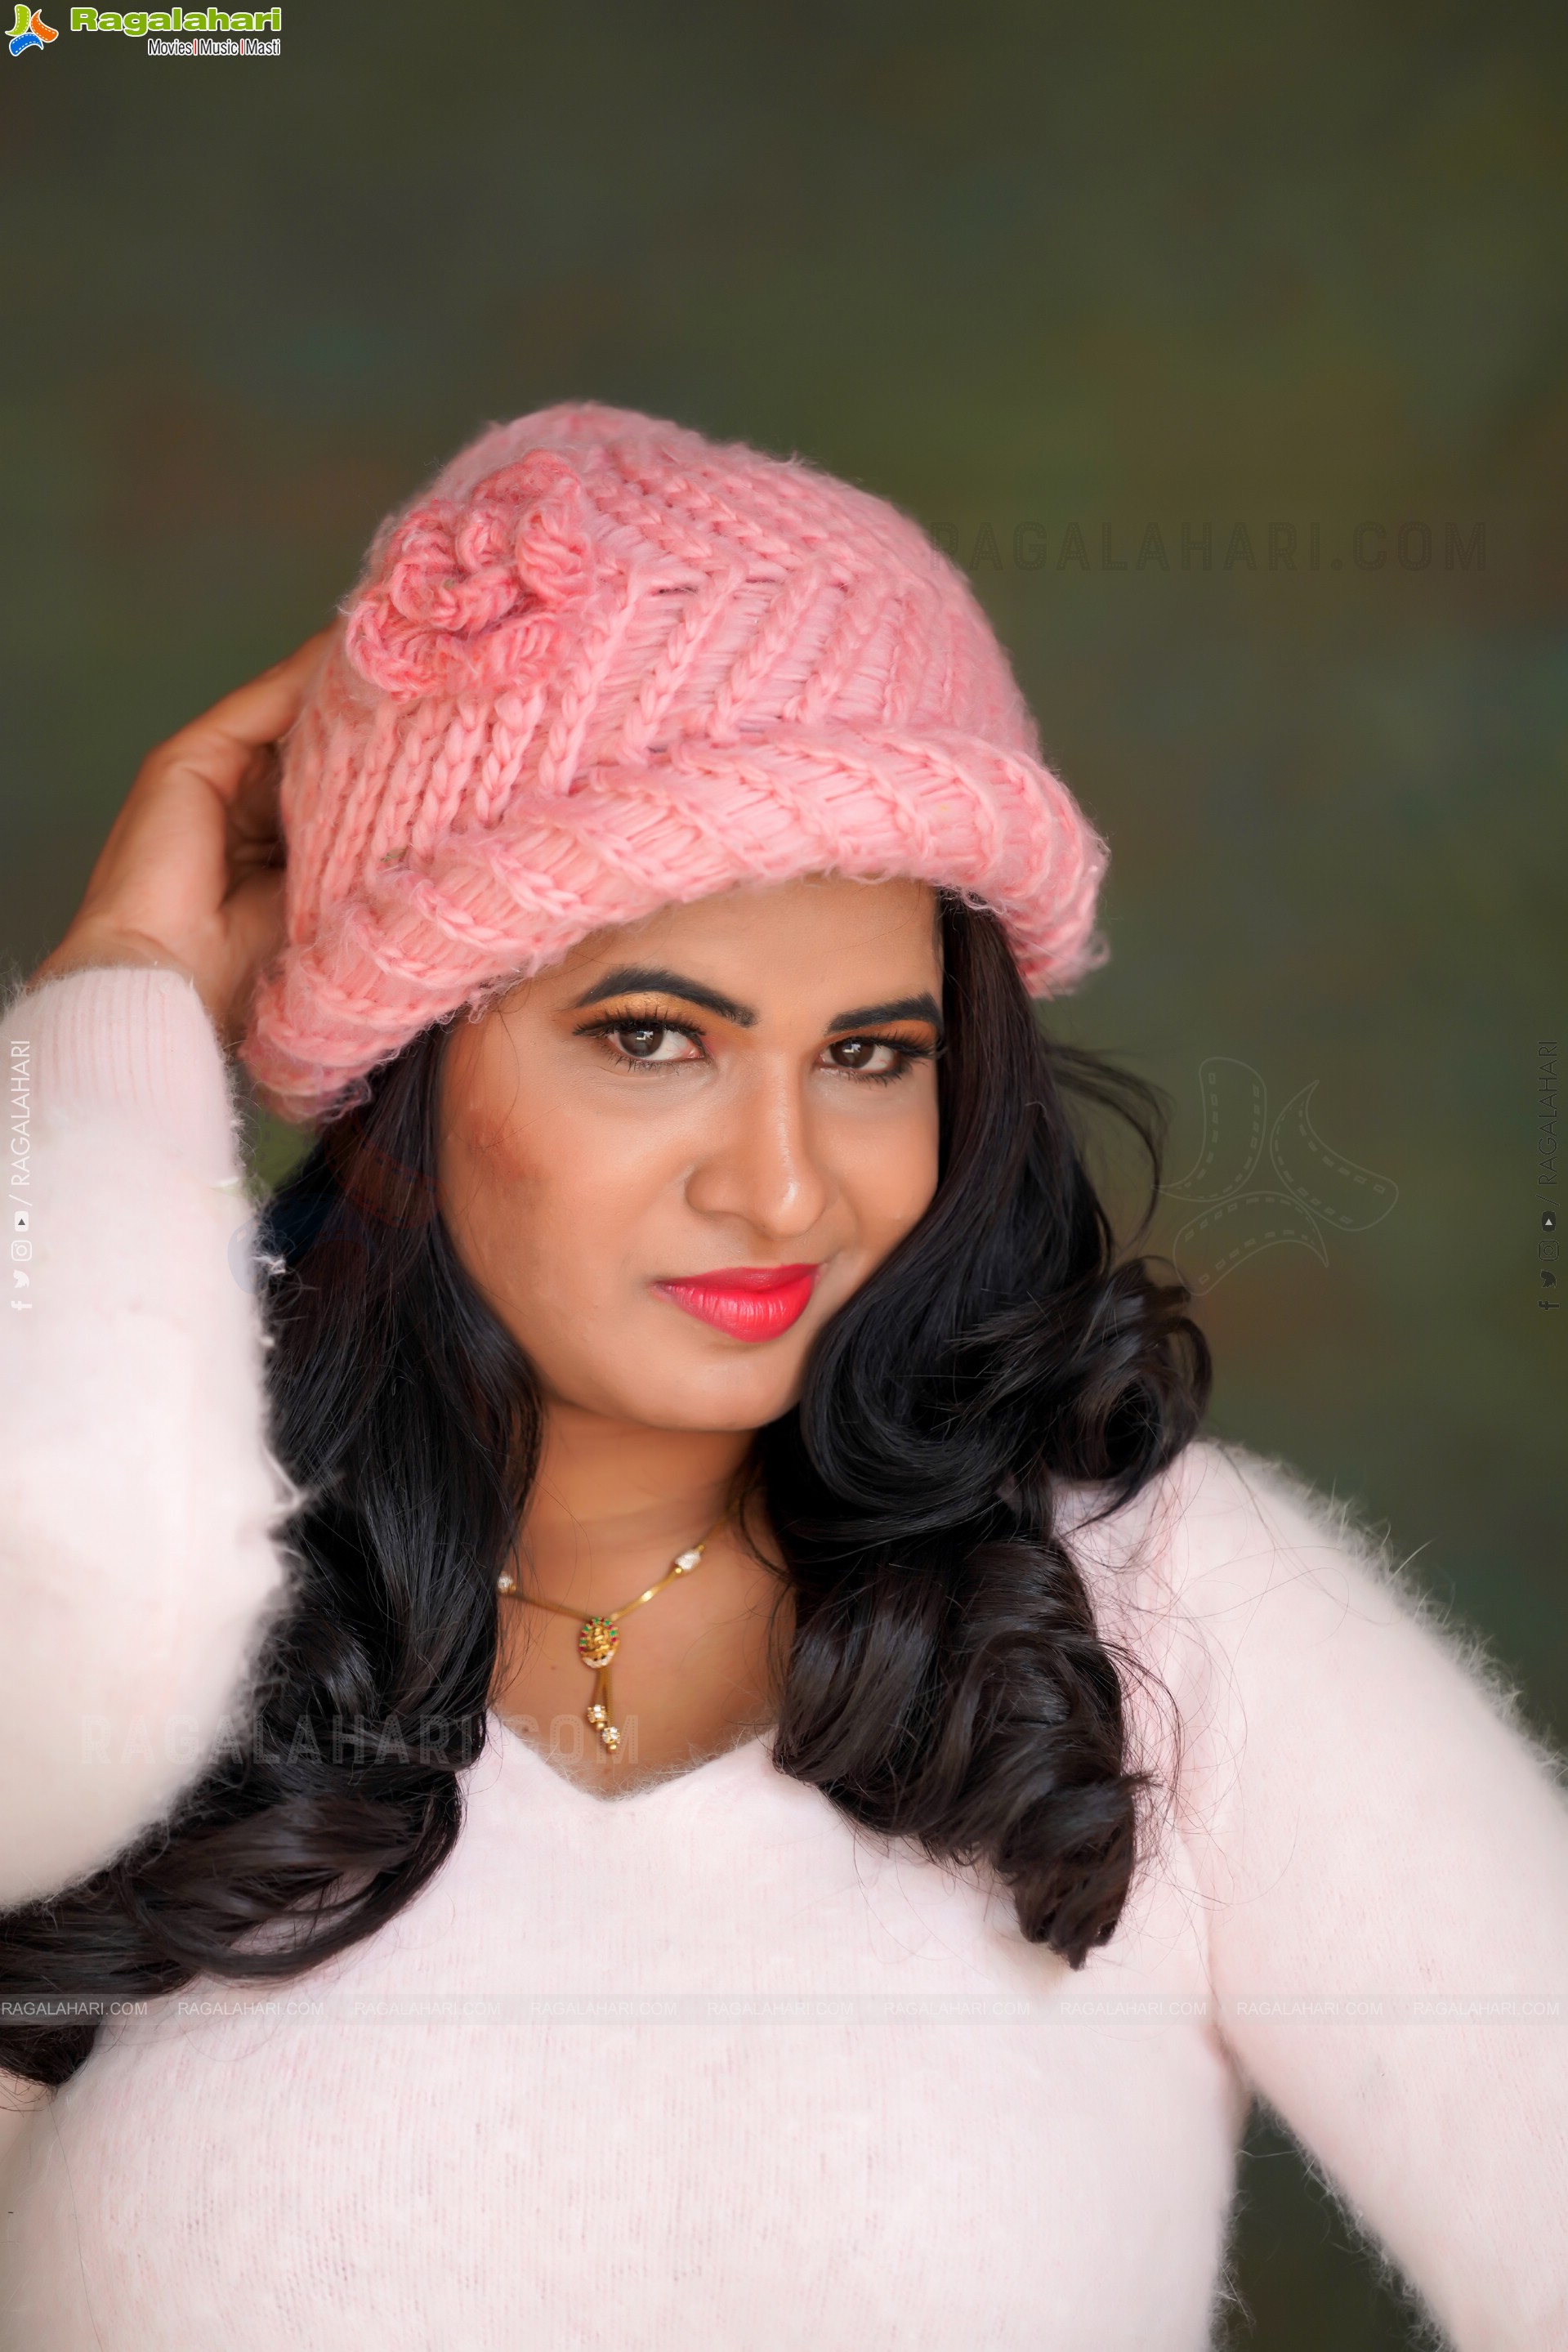 Anusha Venugopal in Baby Pink Sweatshirt and Beanie Cap, Exclusive Photo Shoot